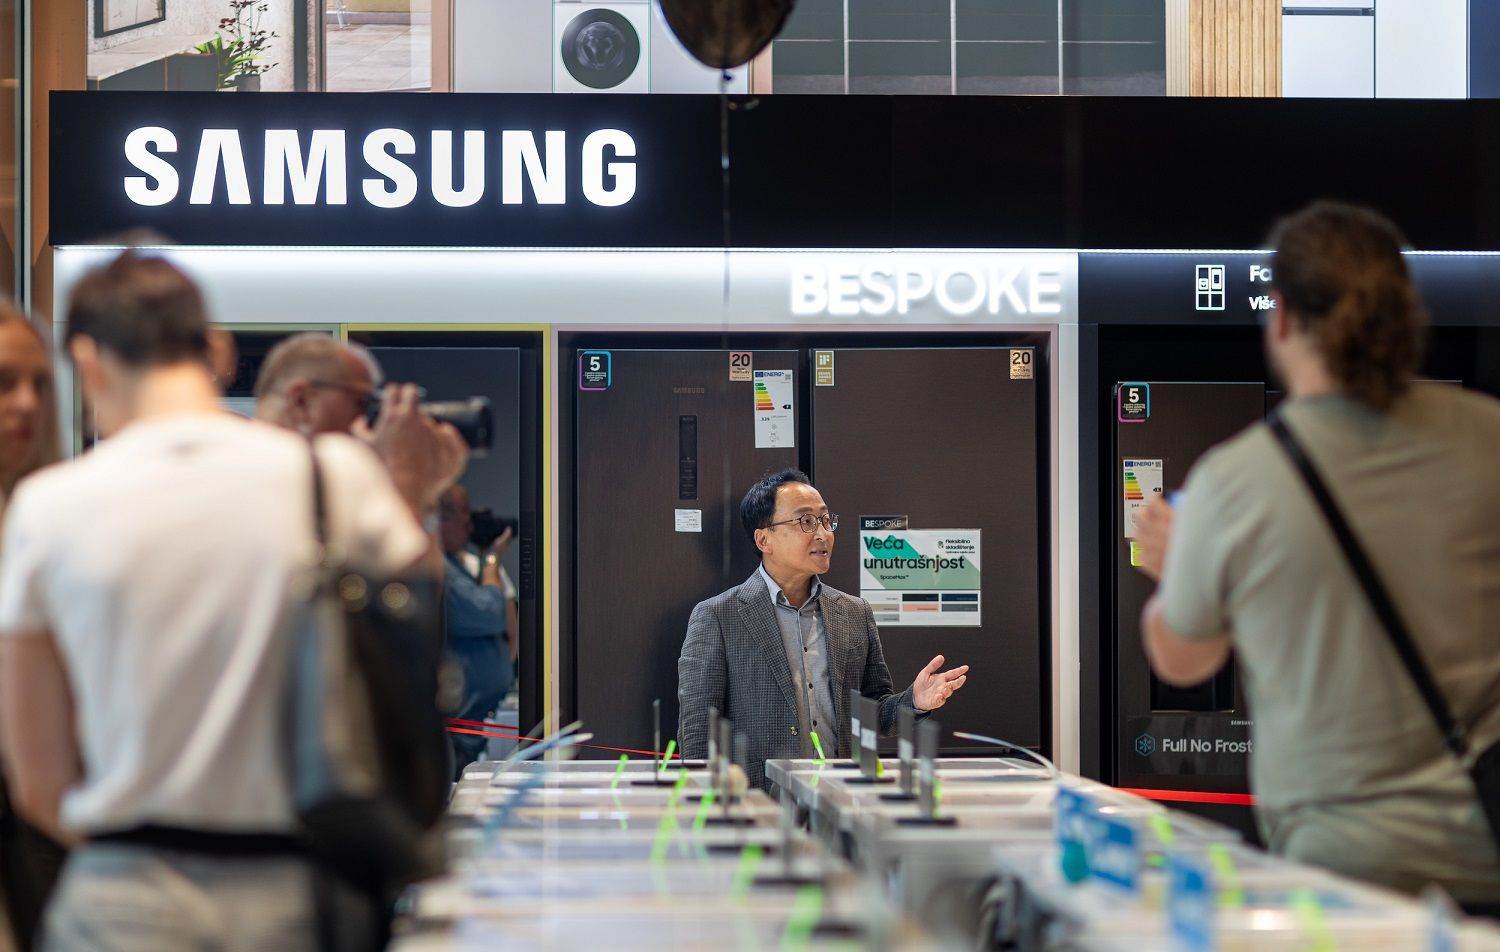  Samsung Experience zone_Jong Ho Kang, CEO, Samsung Hrvatska_2 - Ivan Lacković.jpg 